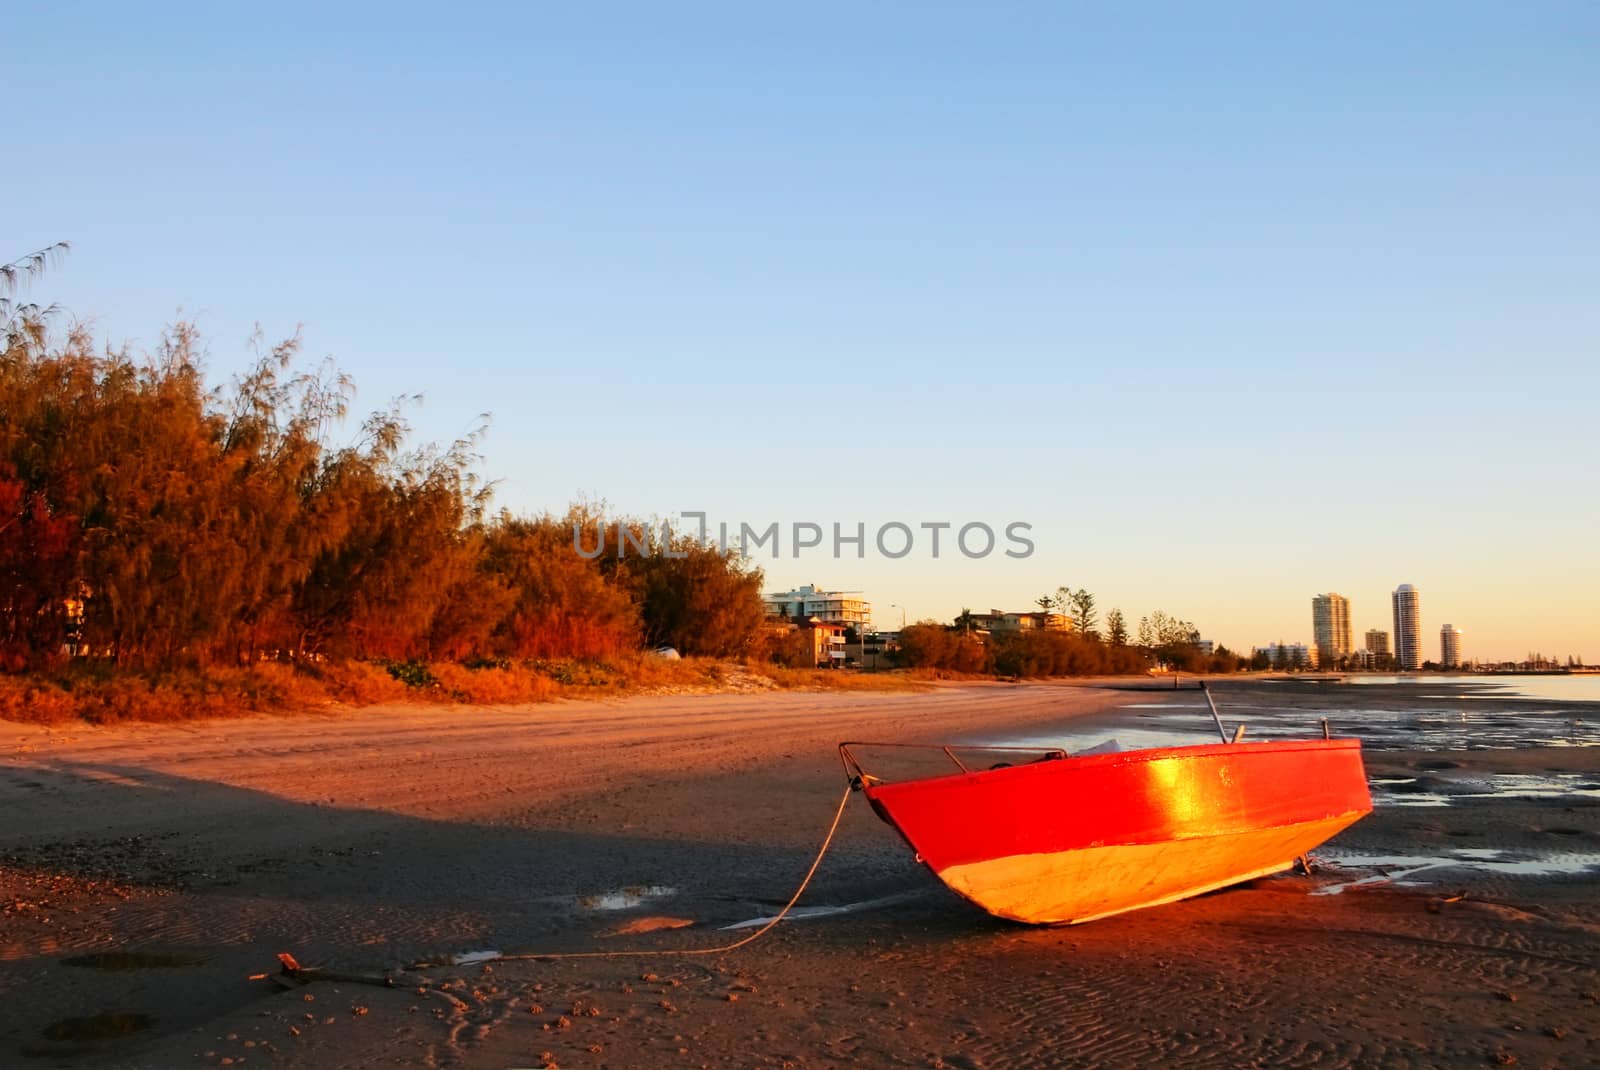 Red Boat At Sunrise by jabiru